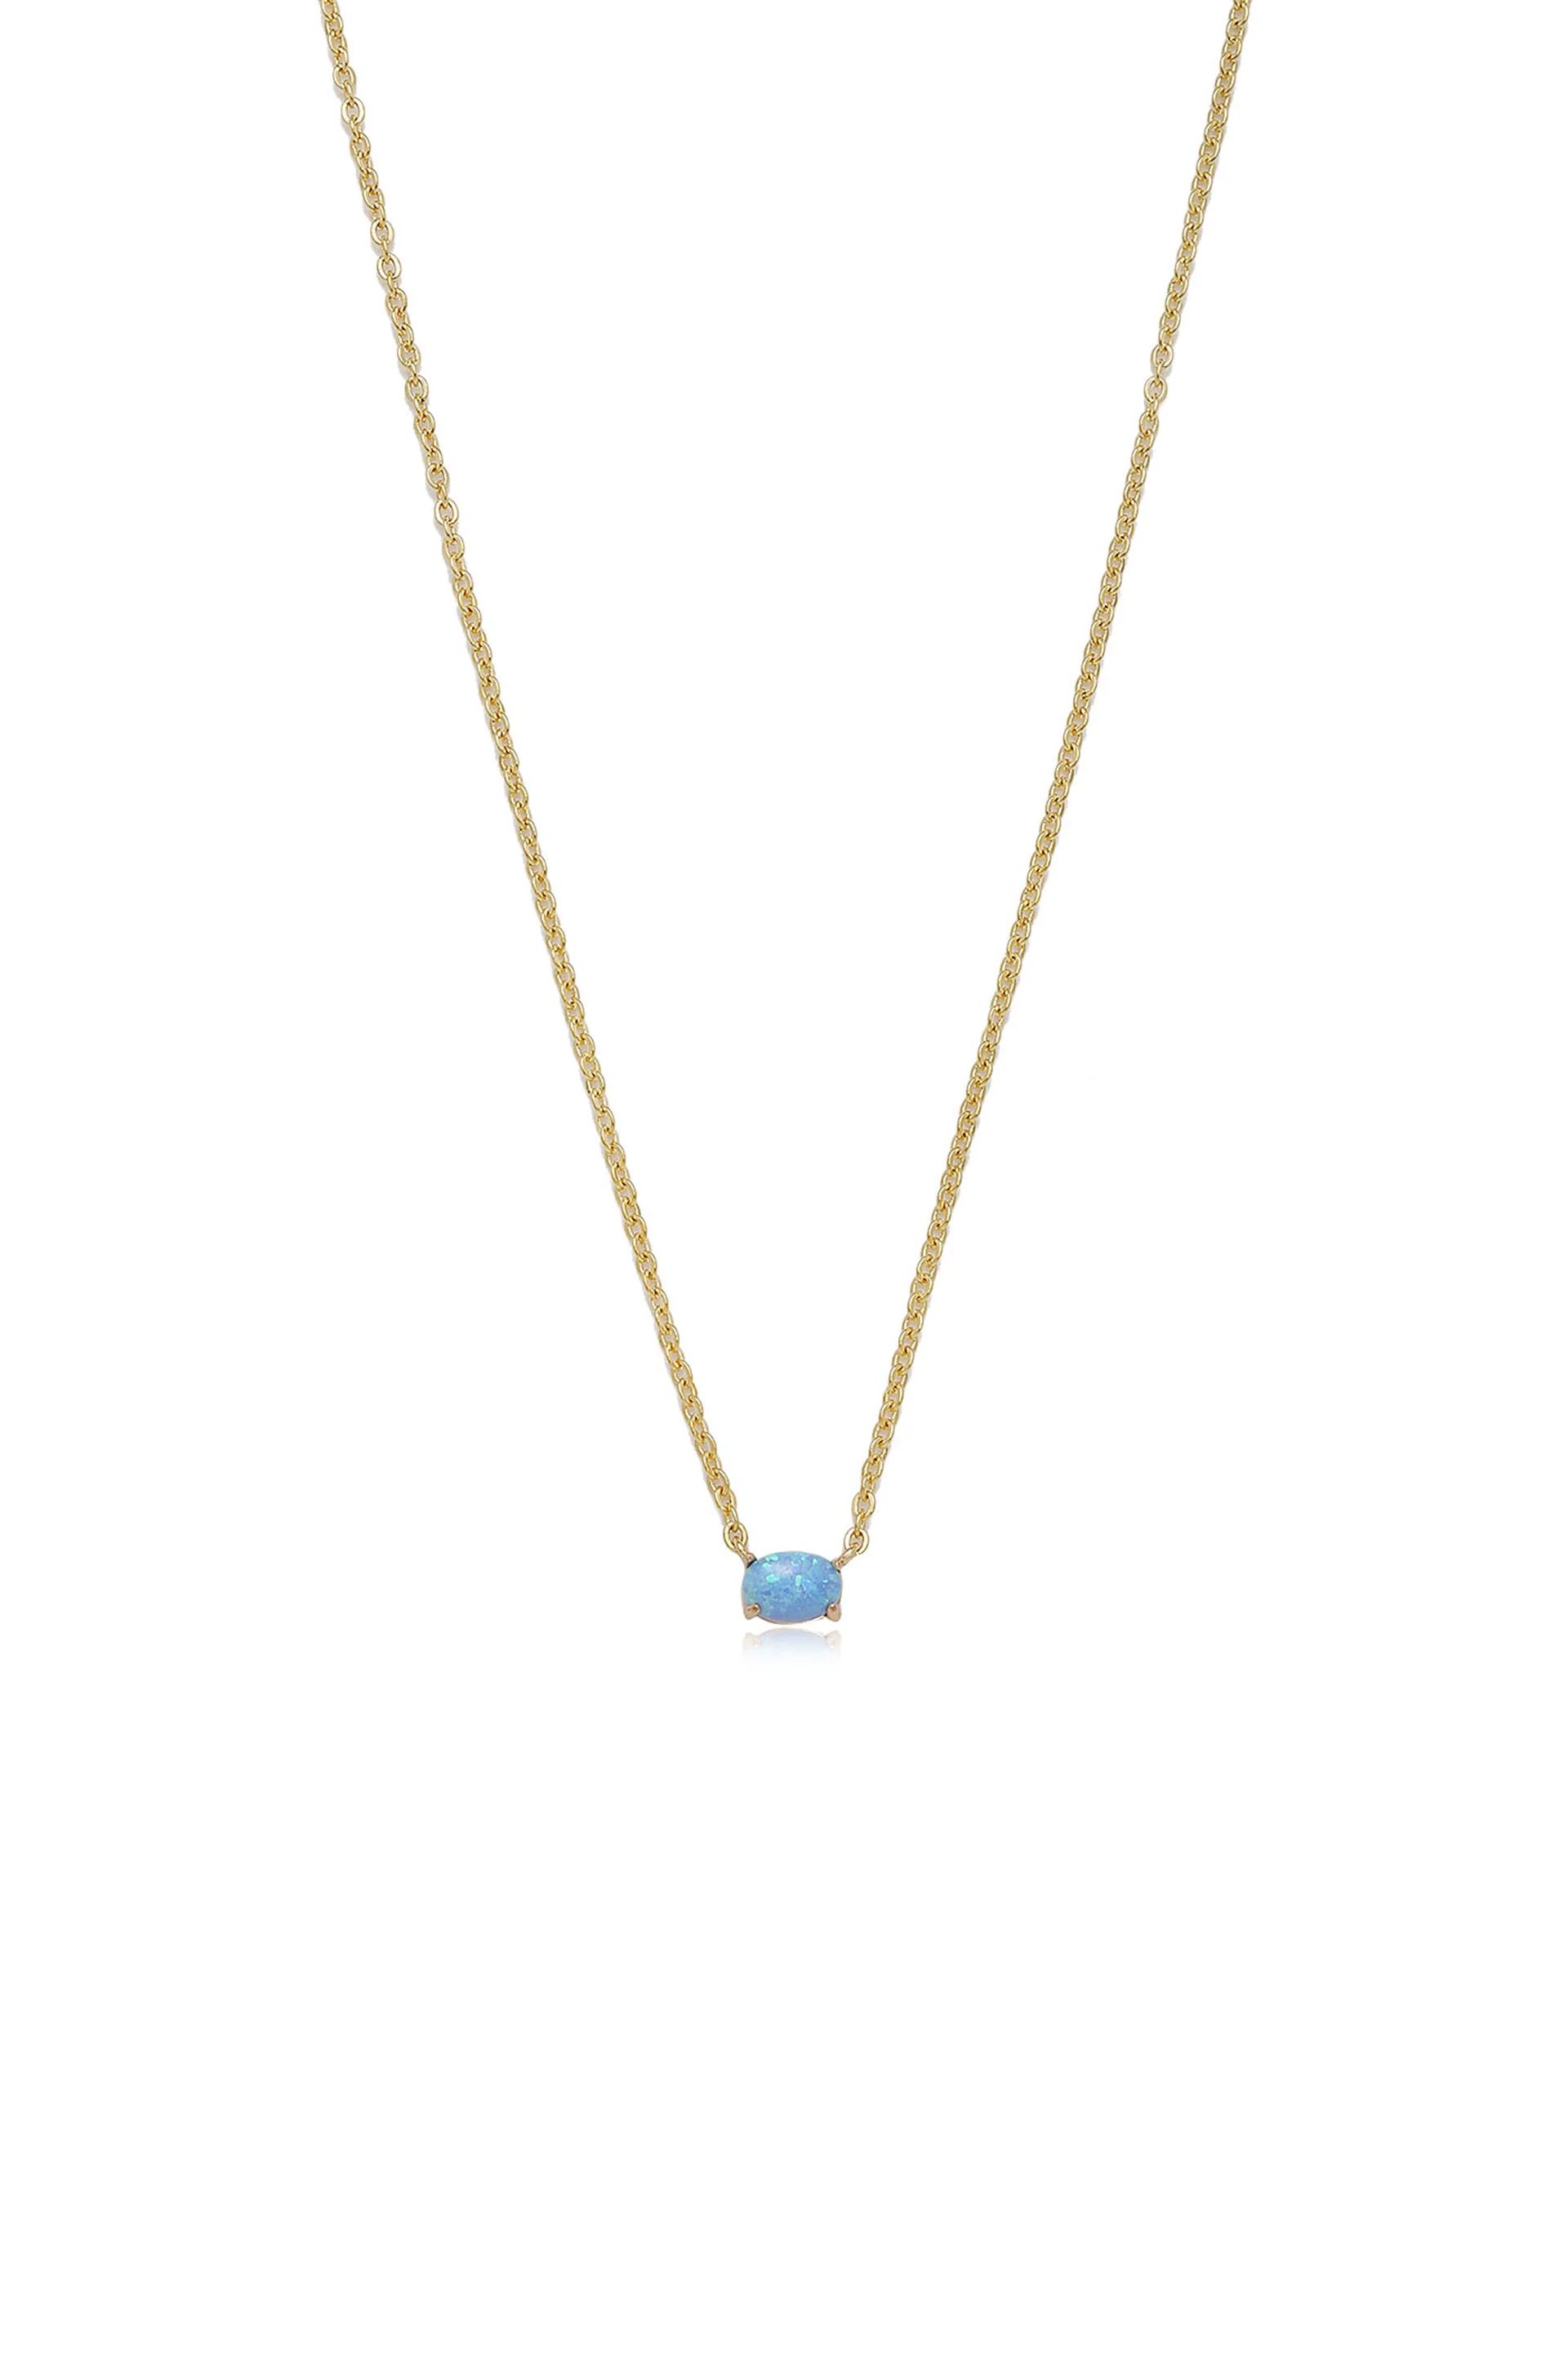 Ettika Jewelry | 18kt Gold Plated & Keepsake Kyocera Opal Necklace | Ettika